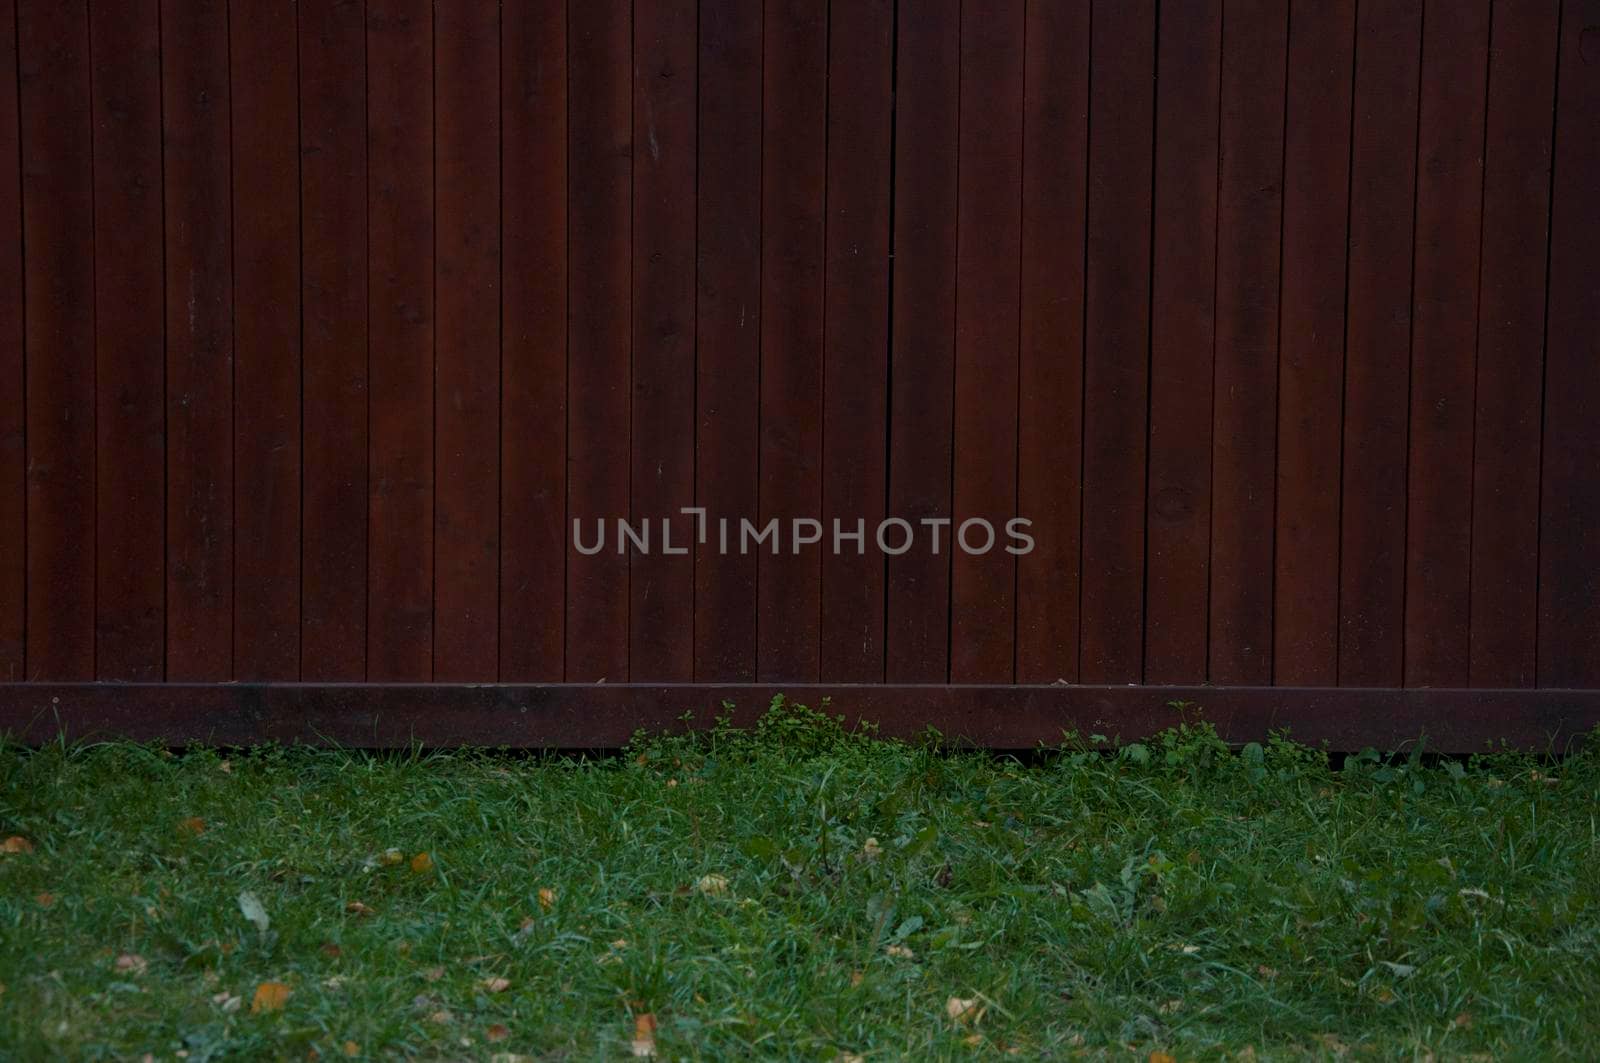 Fresh grass over a wooden grunge background